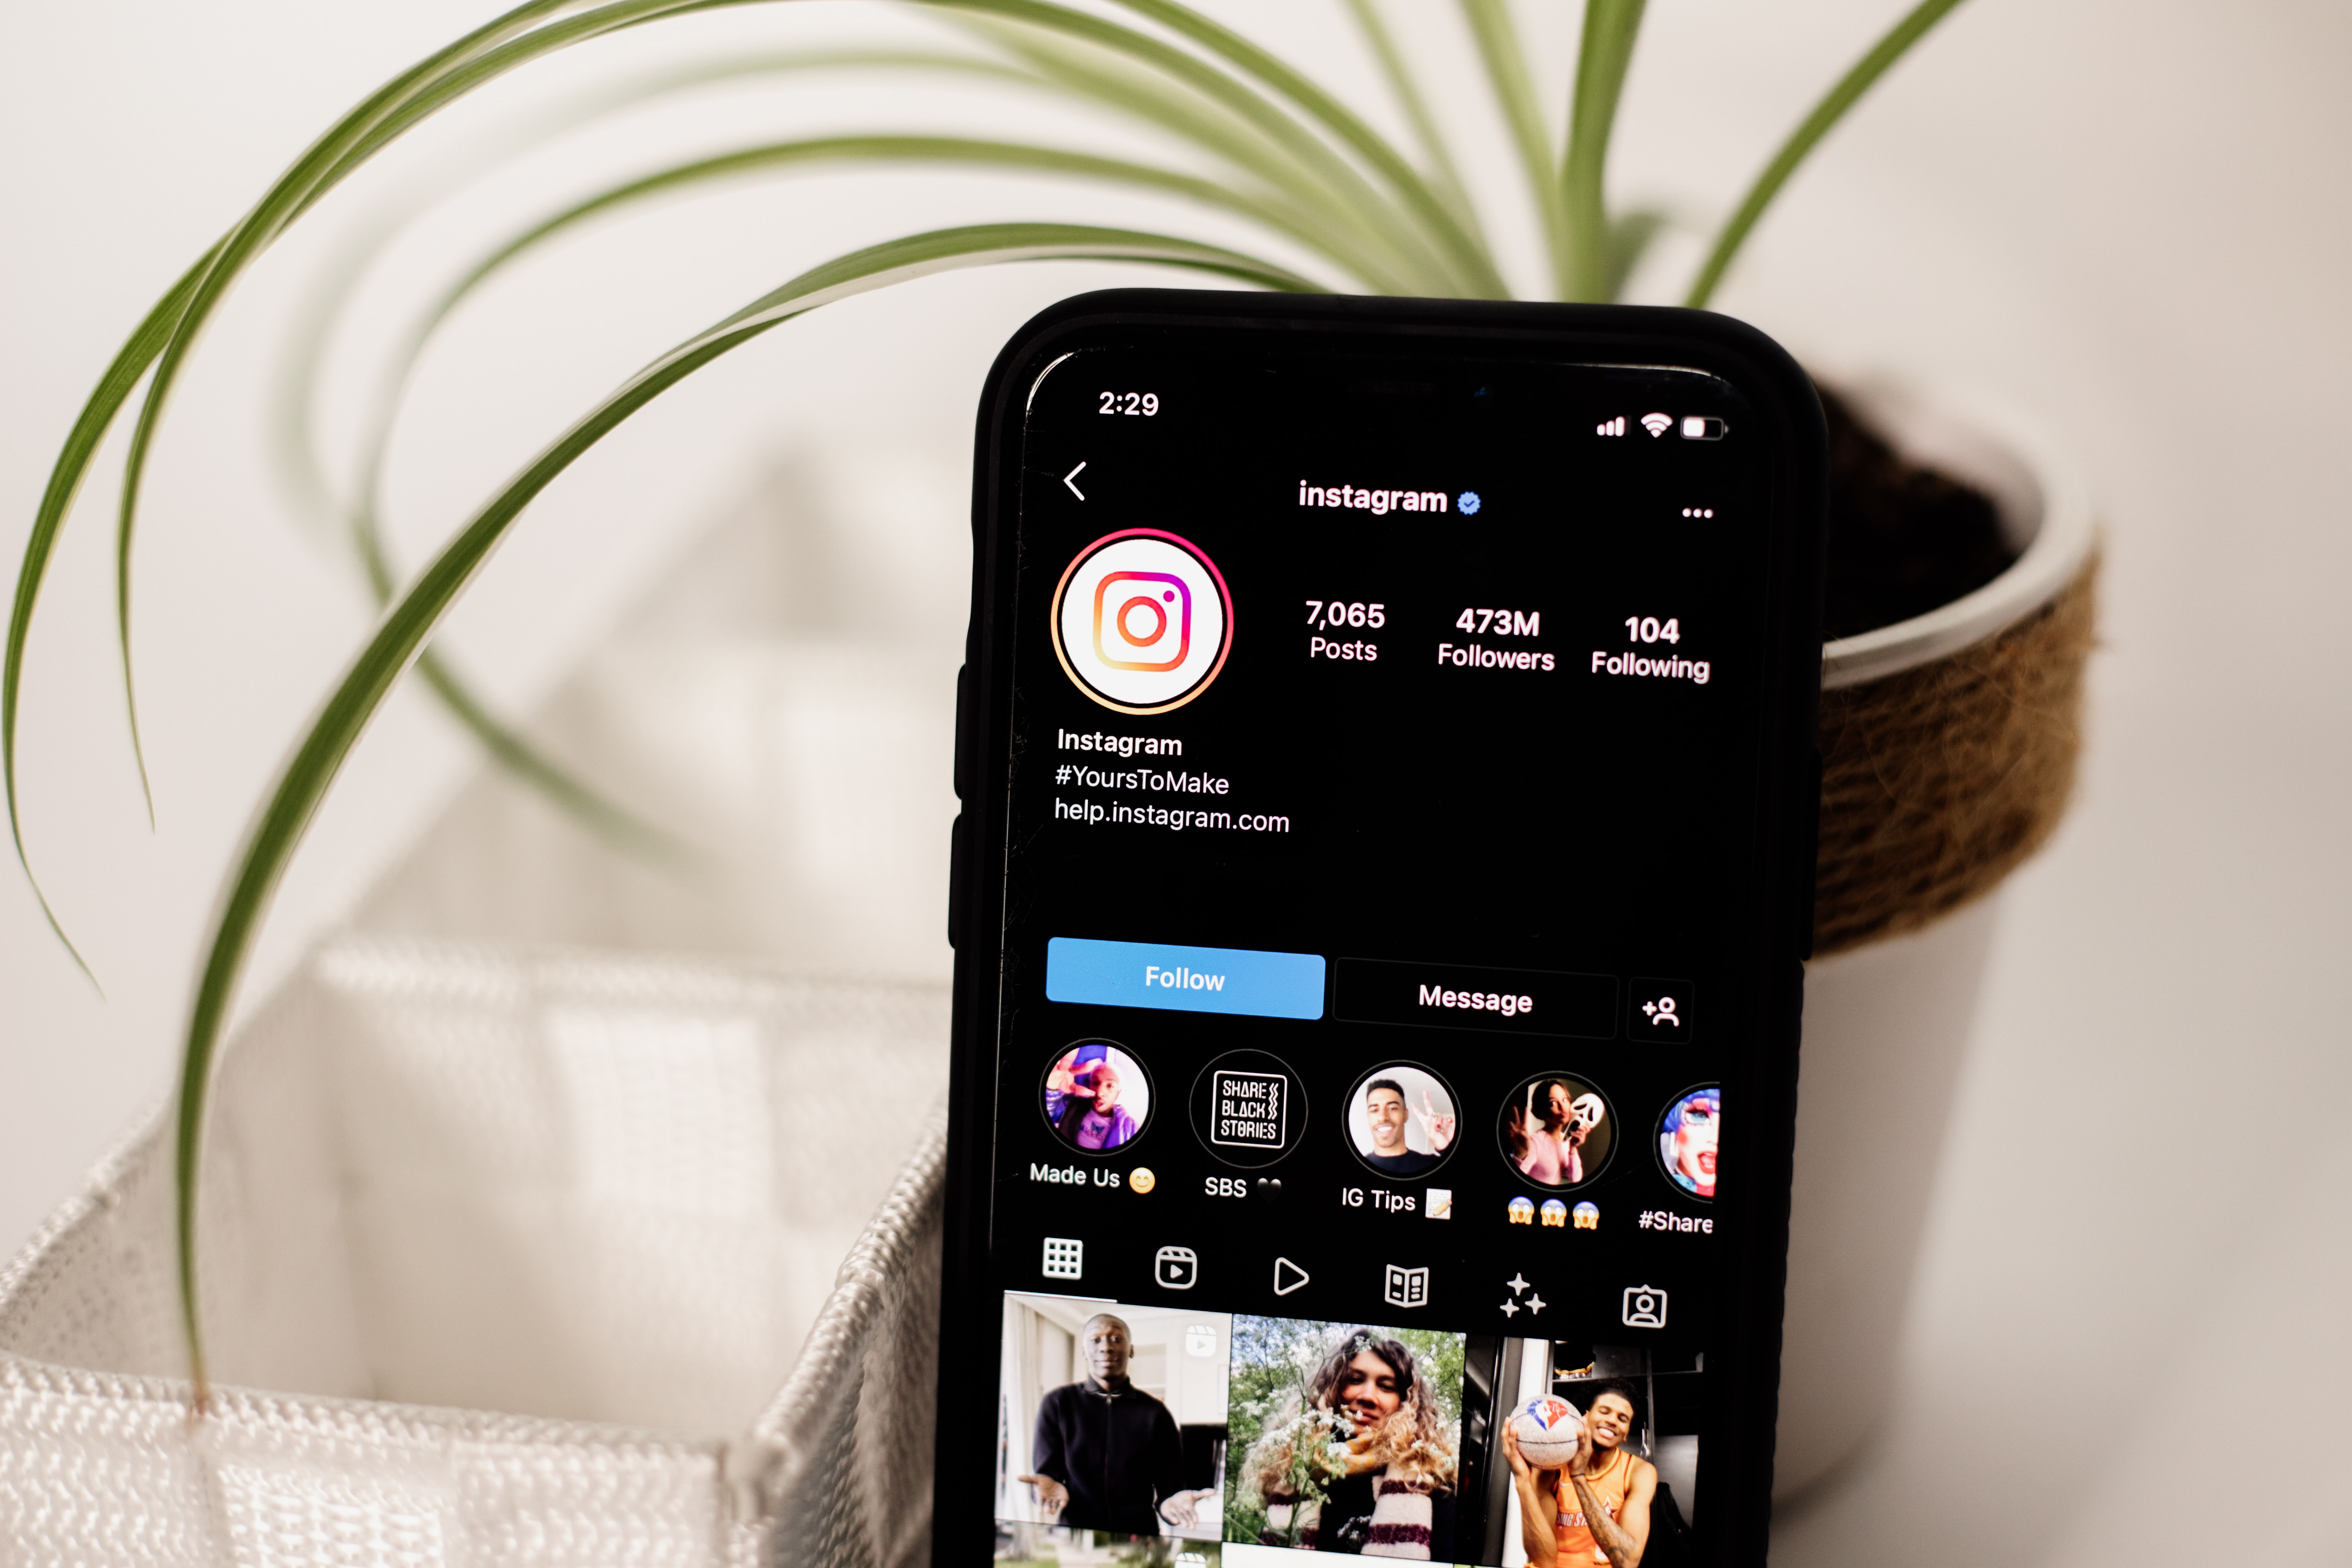 social media platforms giant Instagram